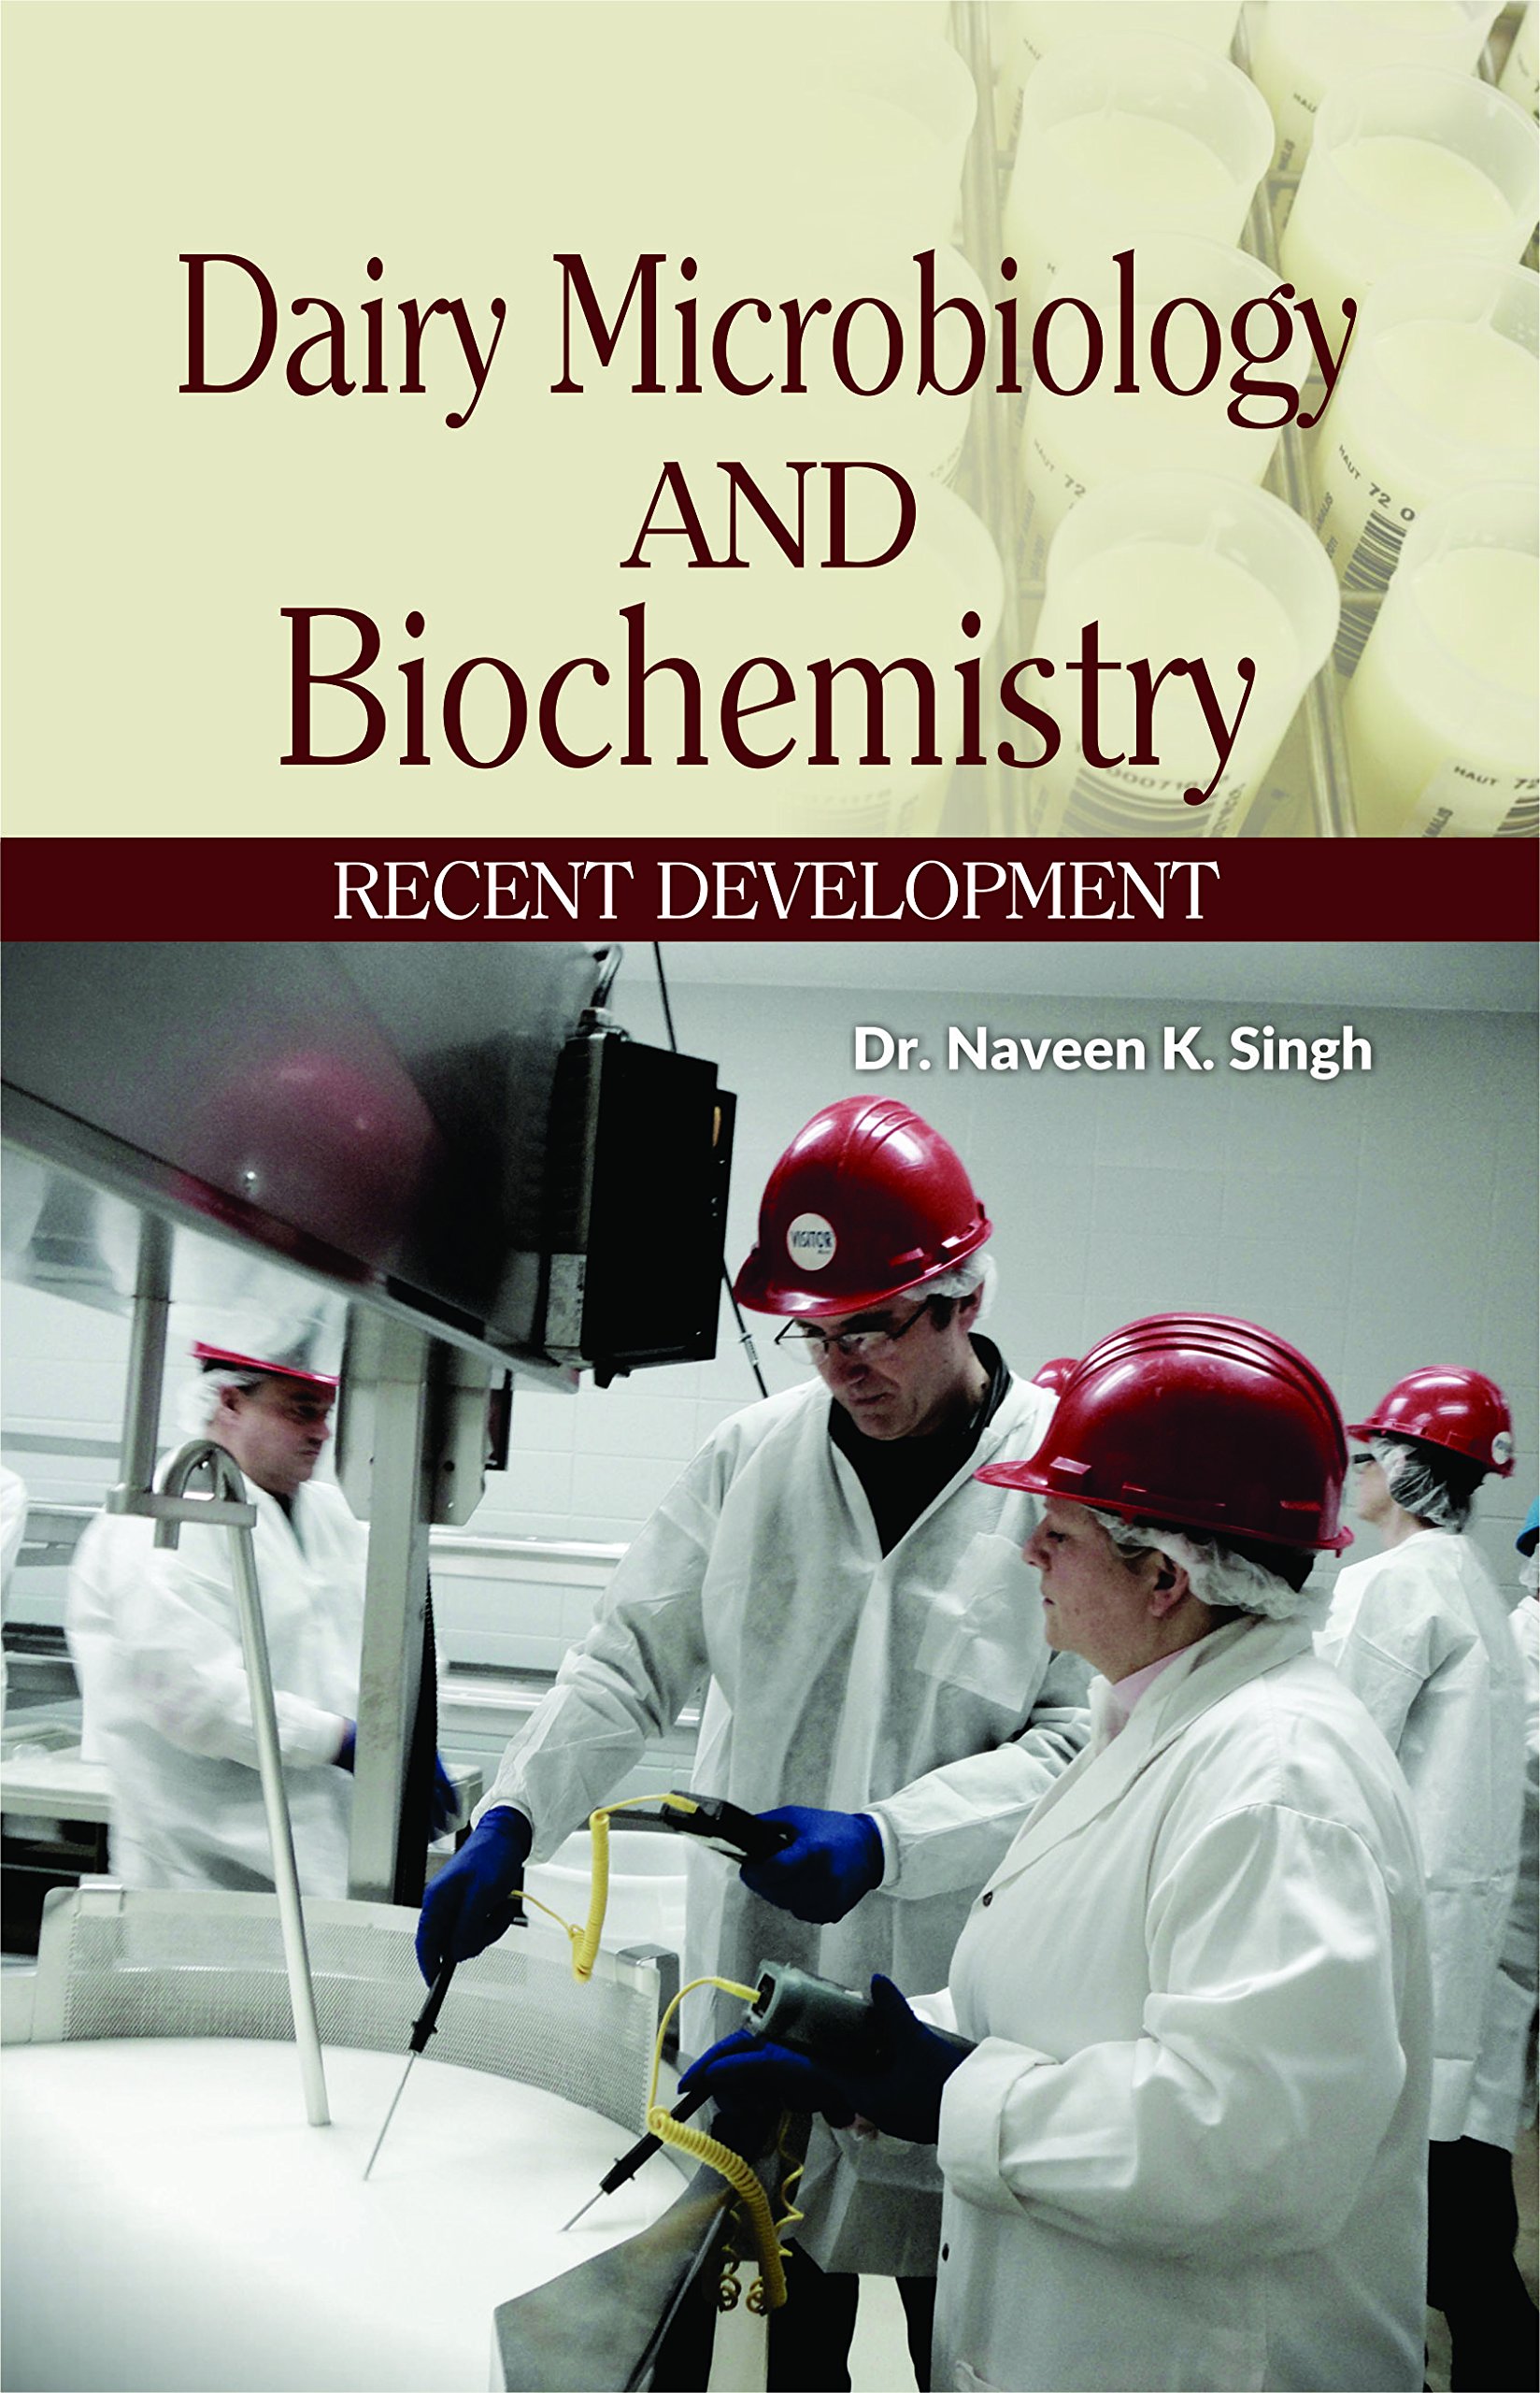 Dairy microbiology and biochemistry recent development